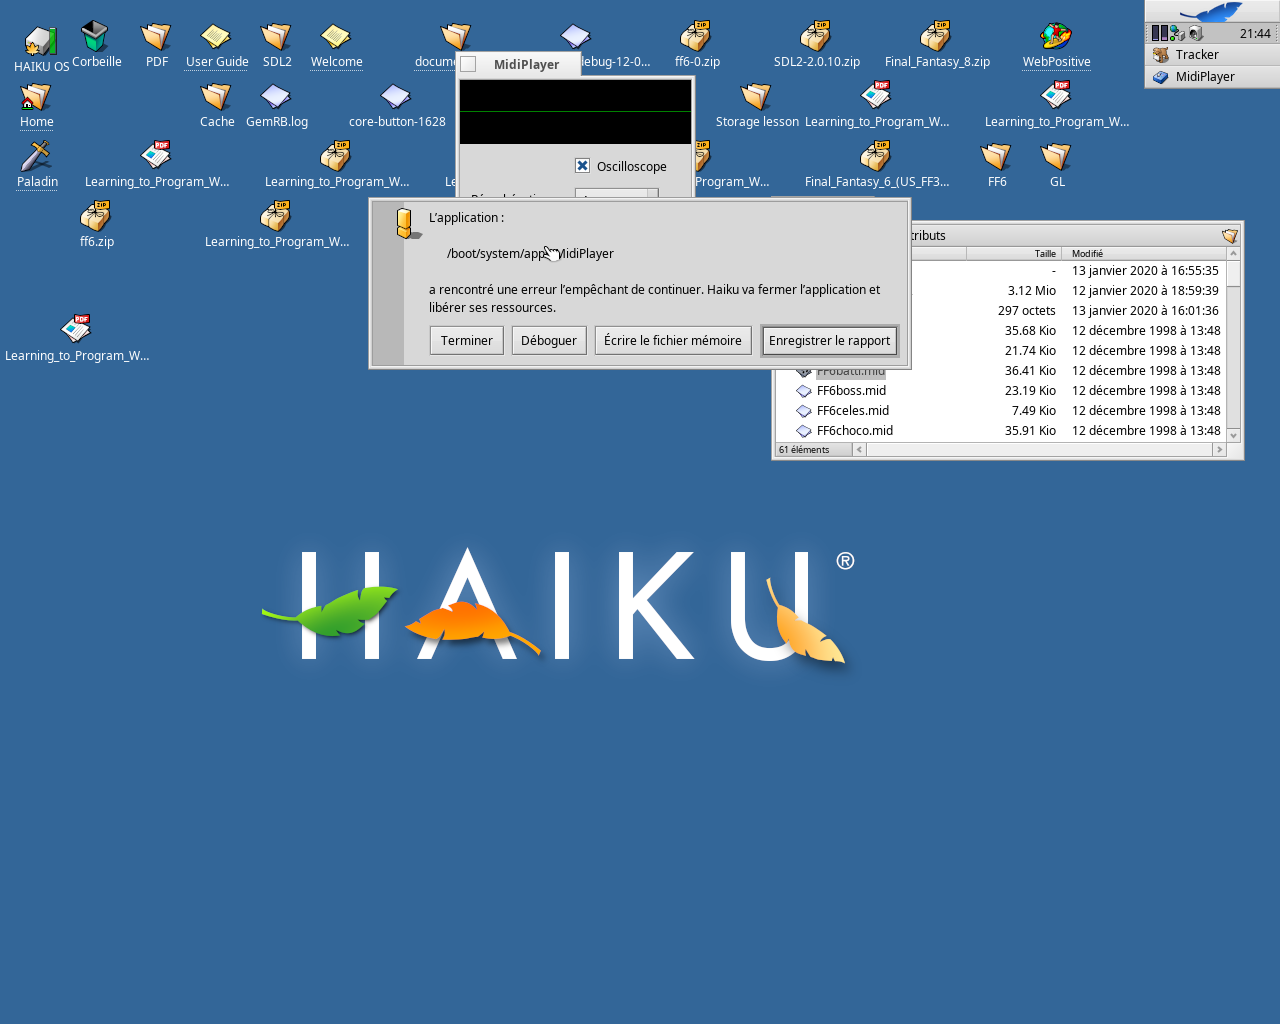 VirtualBox_Haiku%20Beos_13_01_2020_21_44_42